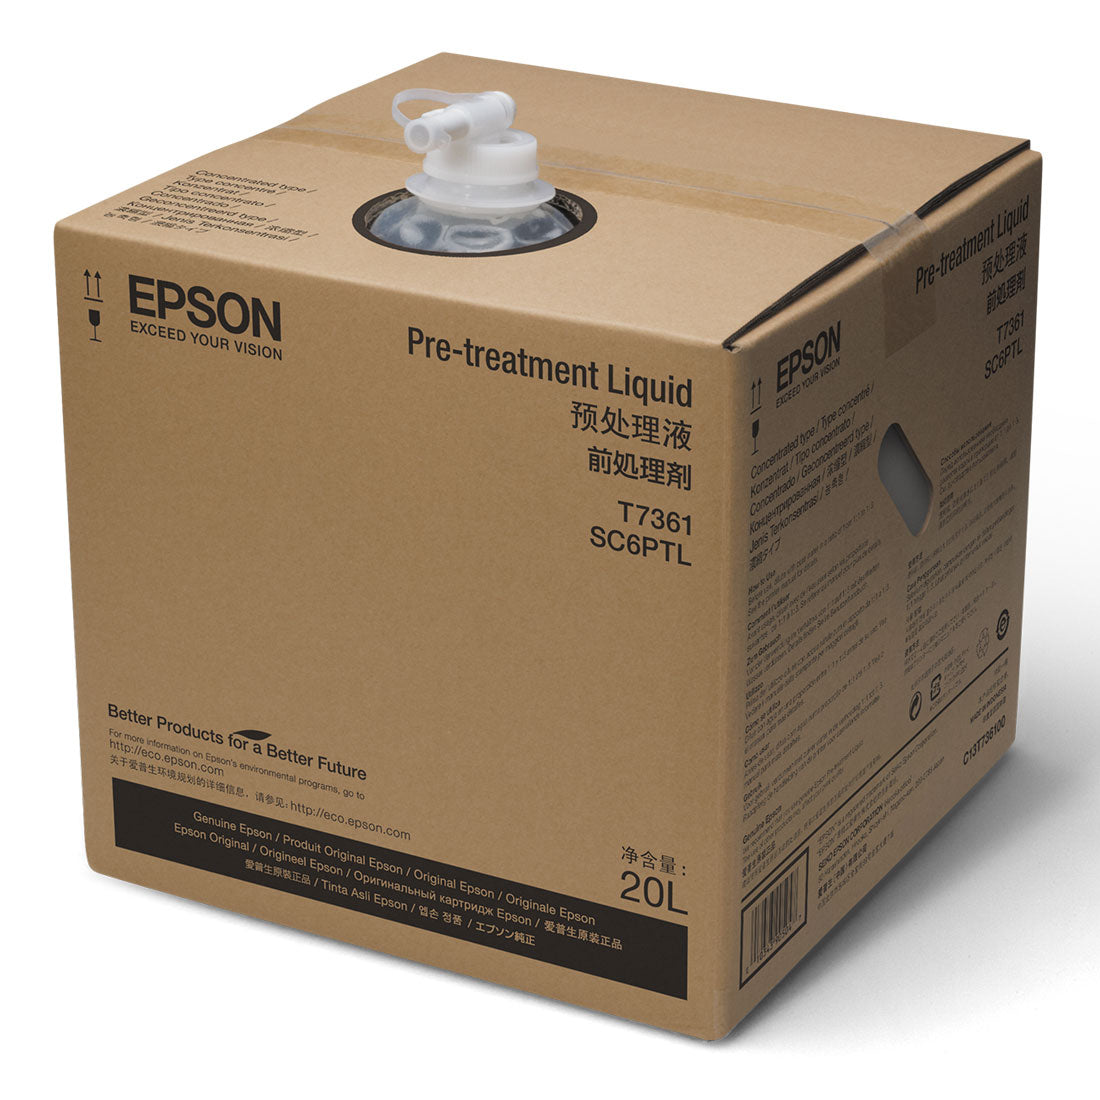 Epson® Pretreatment Fluid For Cotton - Joto Imaging Supplies Canada